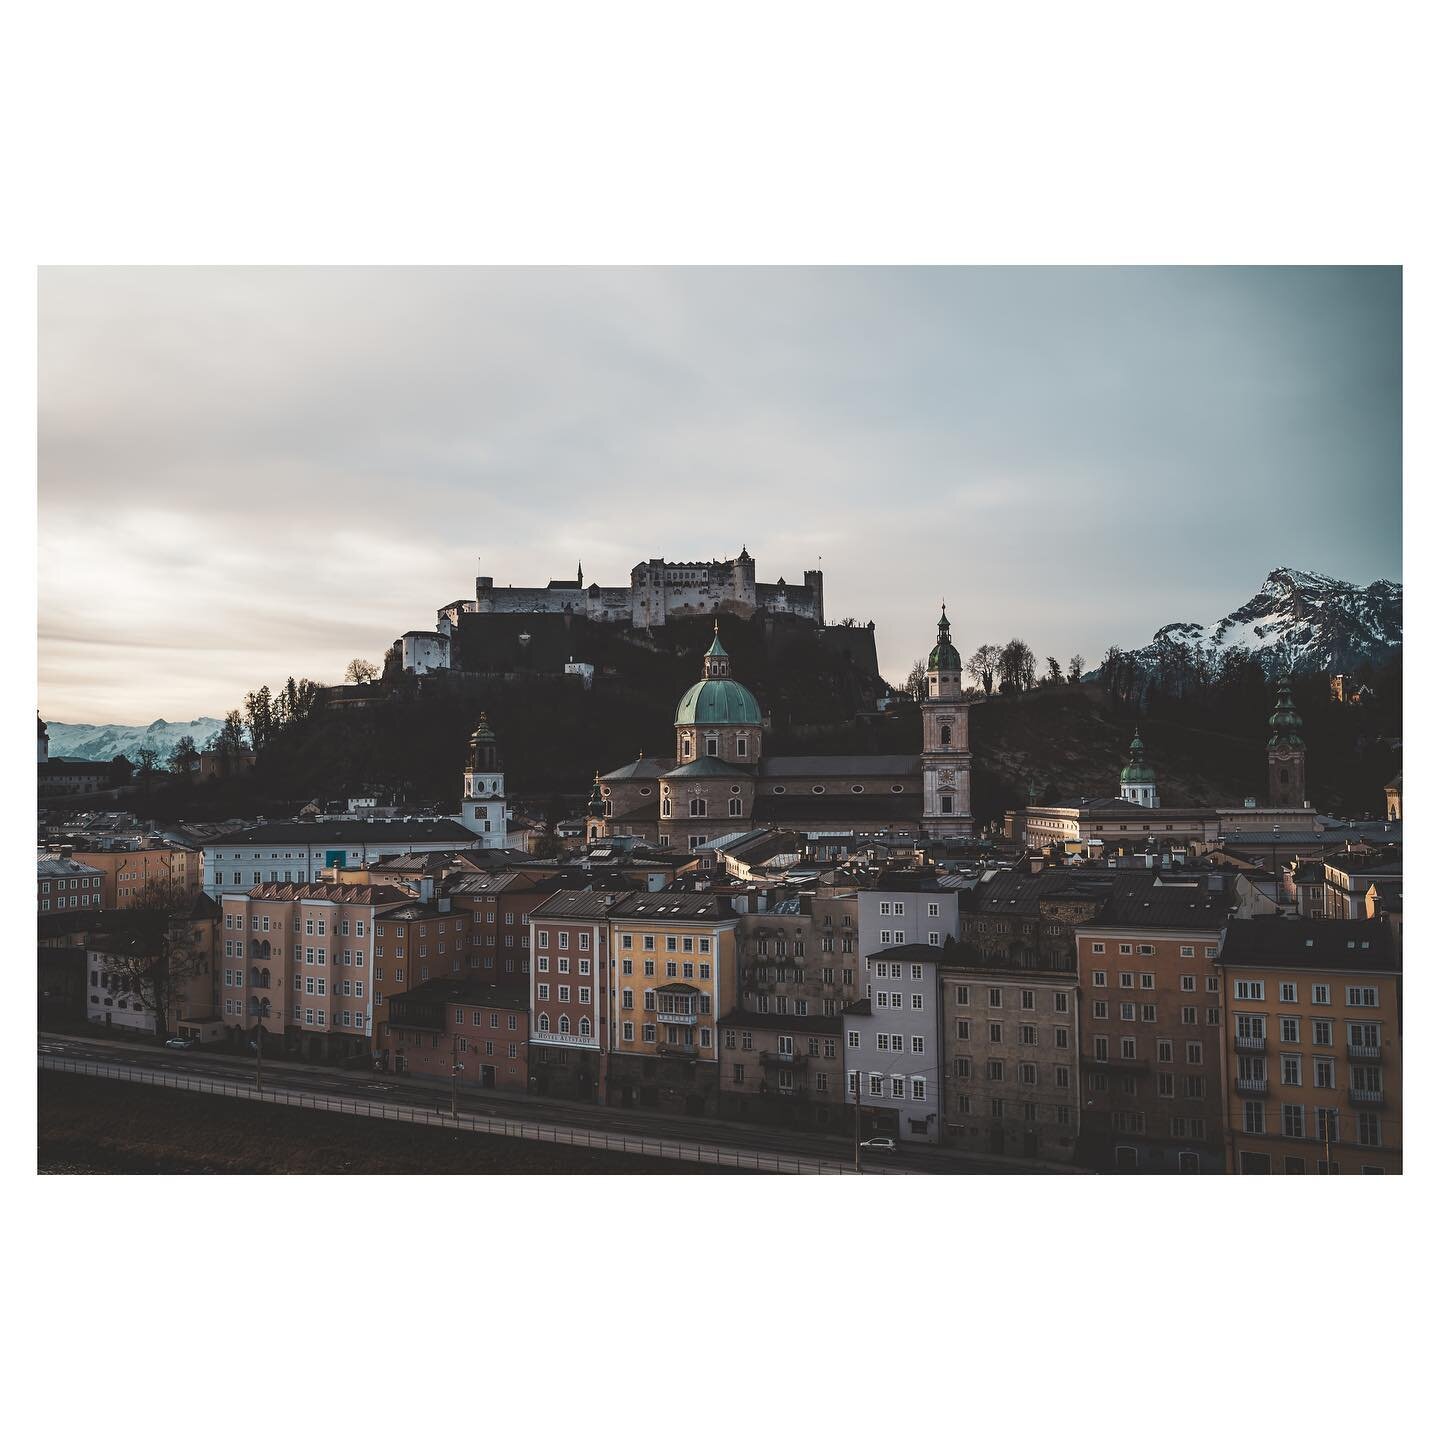 My home is my castle 🏰 
For more go to my website (Link in bio)
-
-
-
#hohensalzburg #cathedral #salzburg #salzburgerland #austria #dahoam #cityscape #cityscapes #cityphotography #oldtown #architecture #vistisalzburg #vistiaustria #1000thingsinaustr